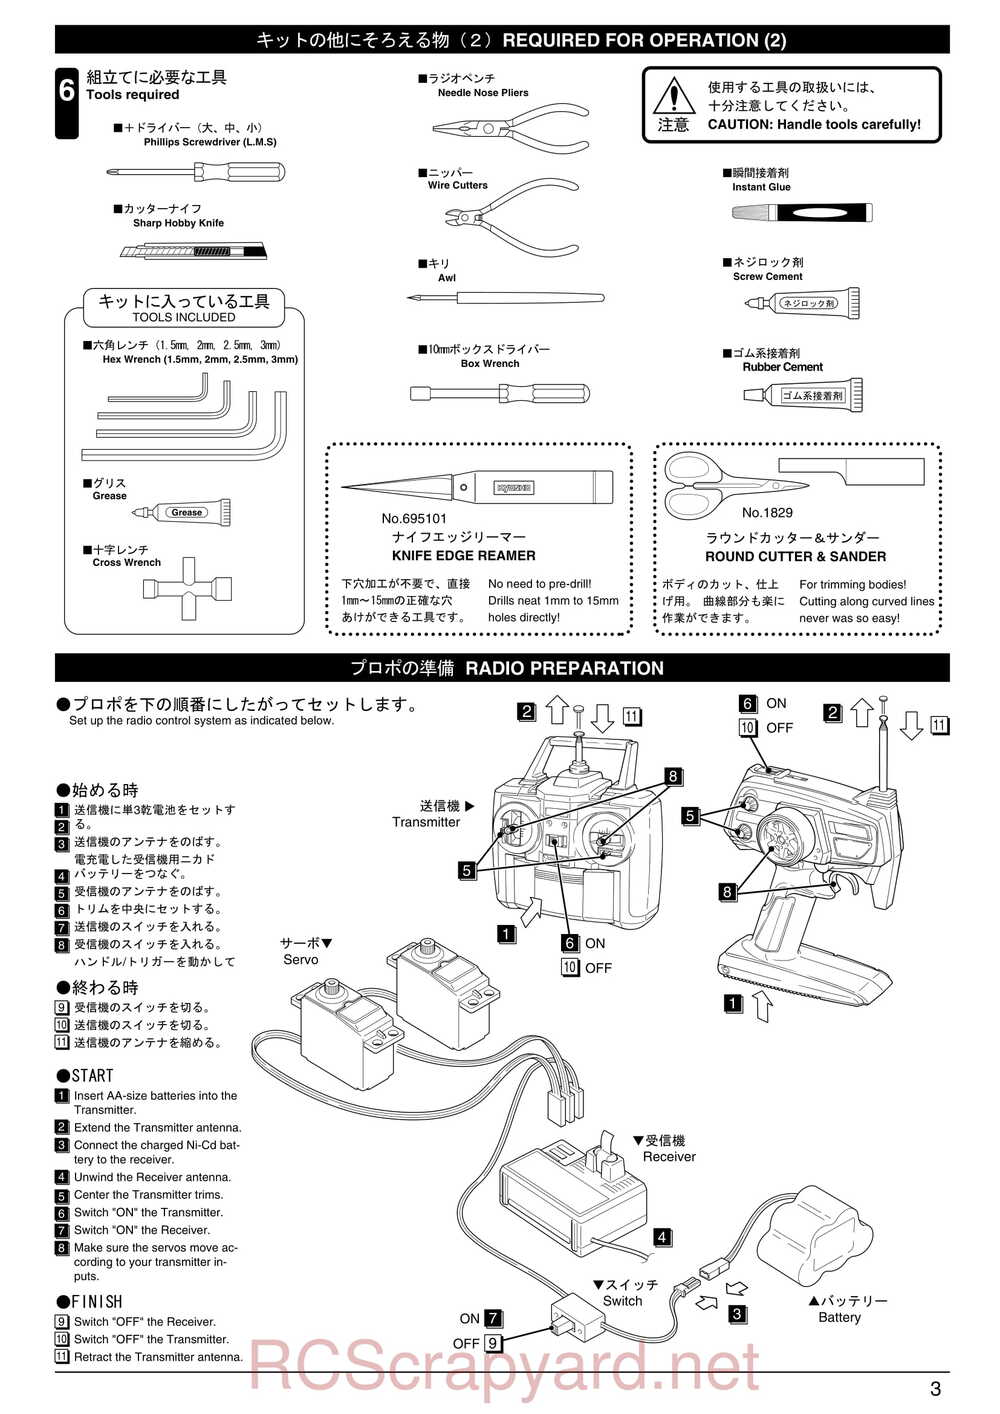 Kyosho - 31271 - Inferno-MP-7-5-Yuichi 2 - Manual - Page 03